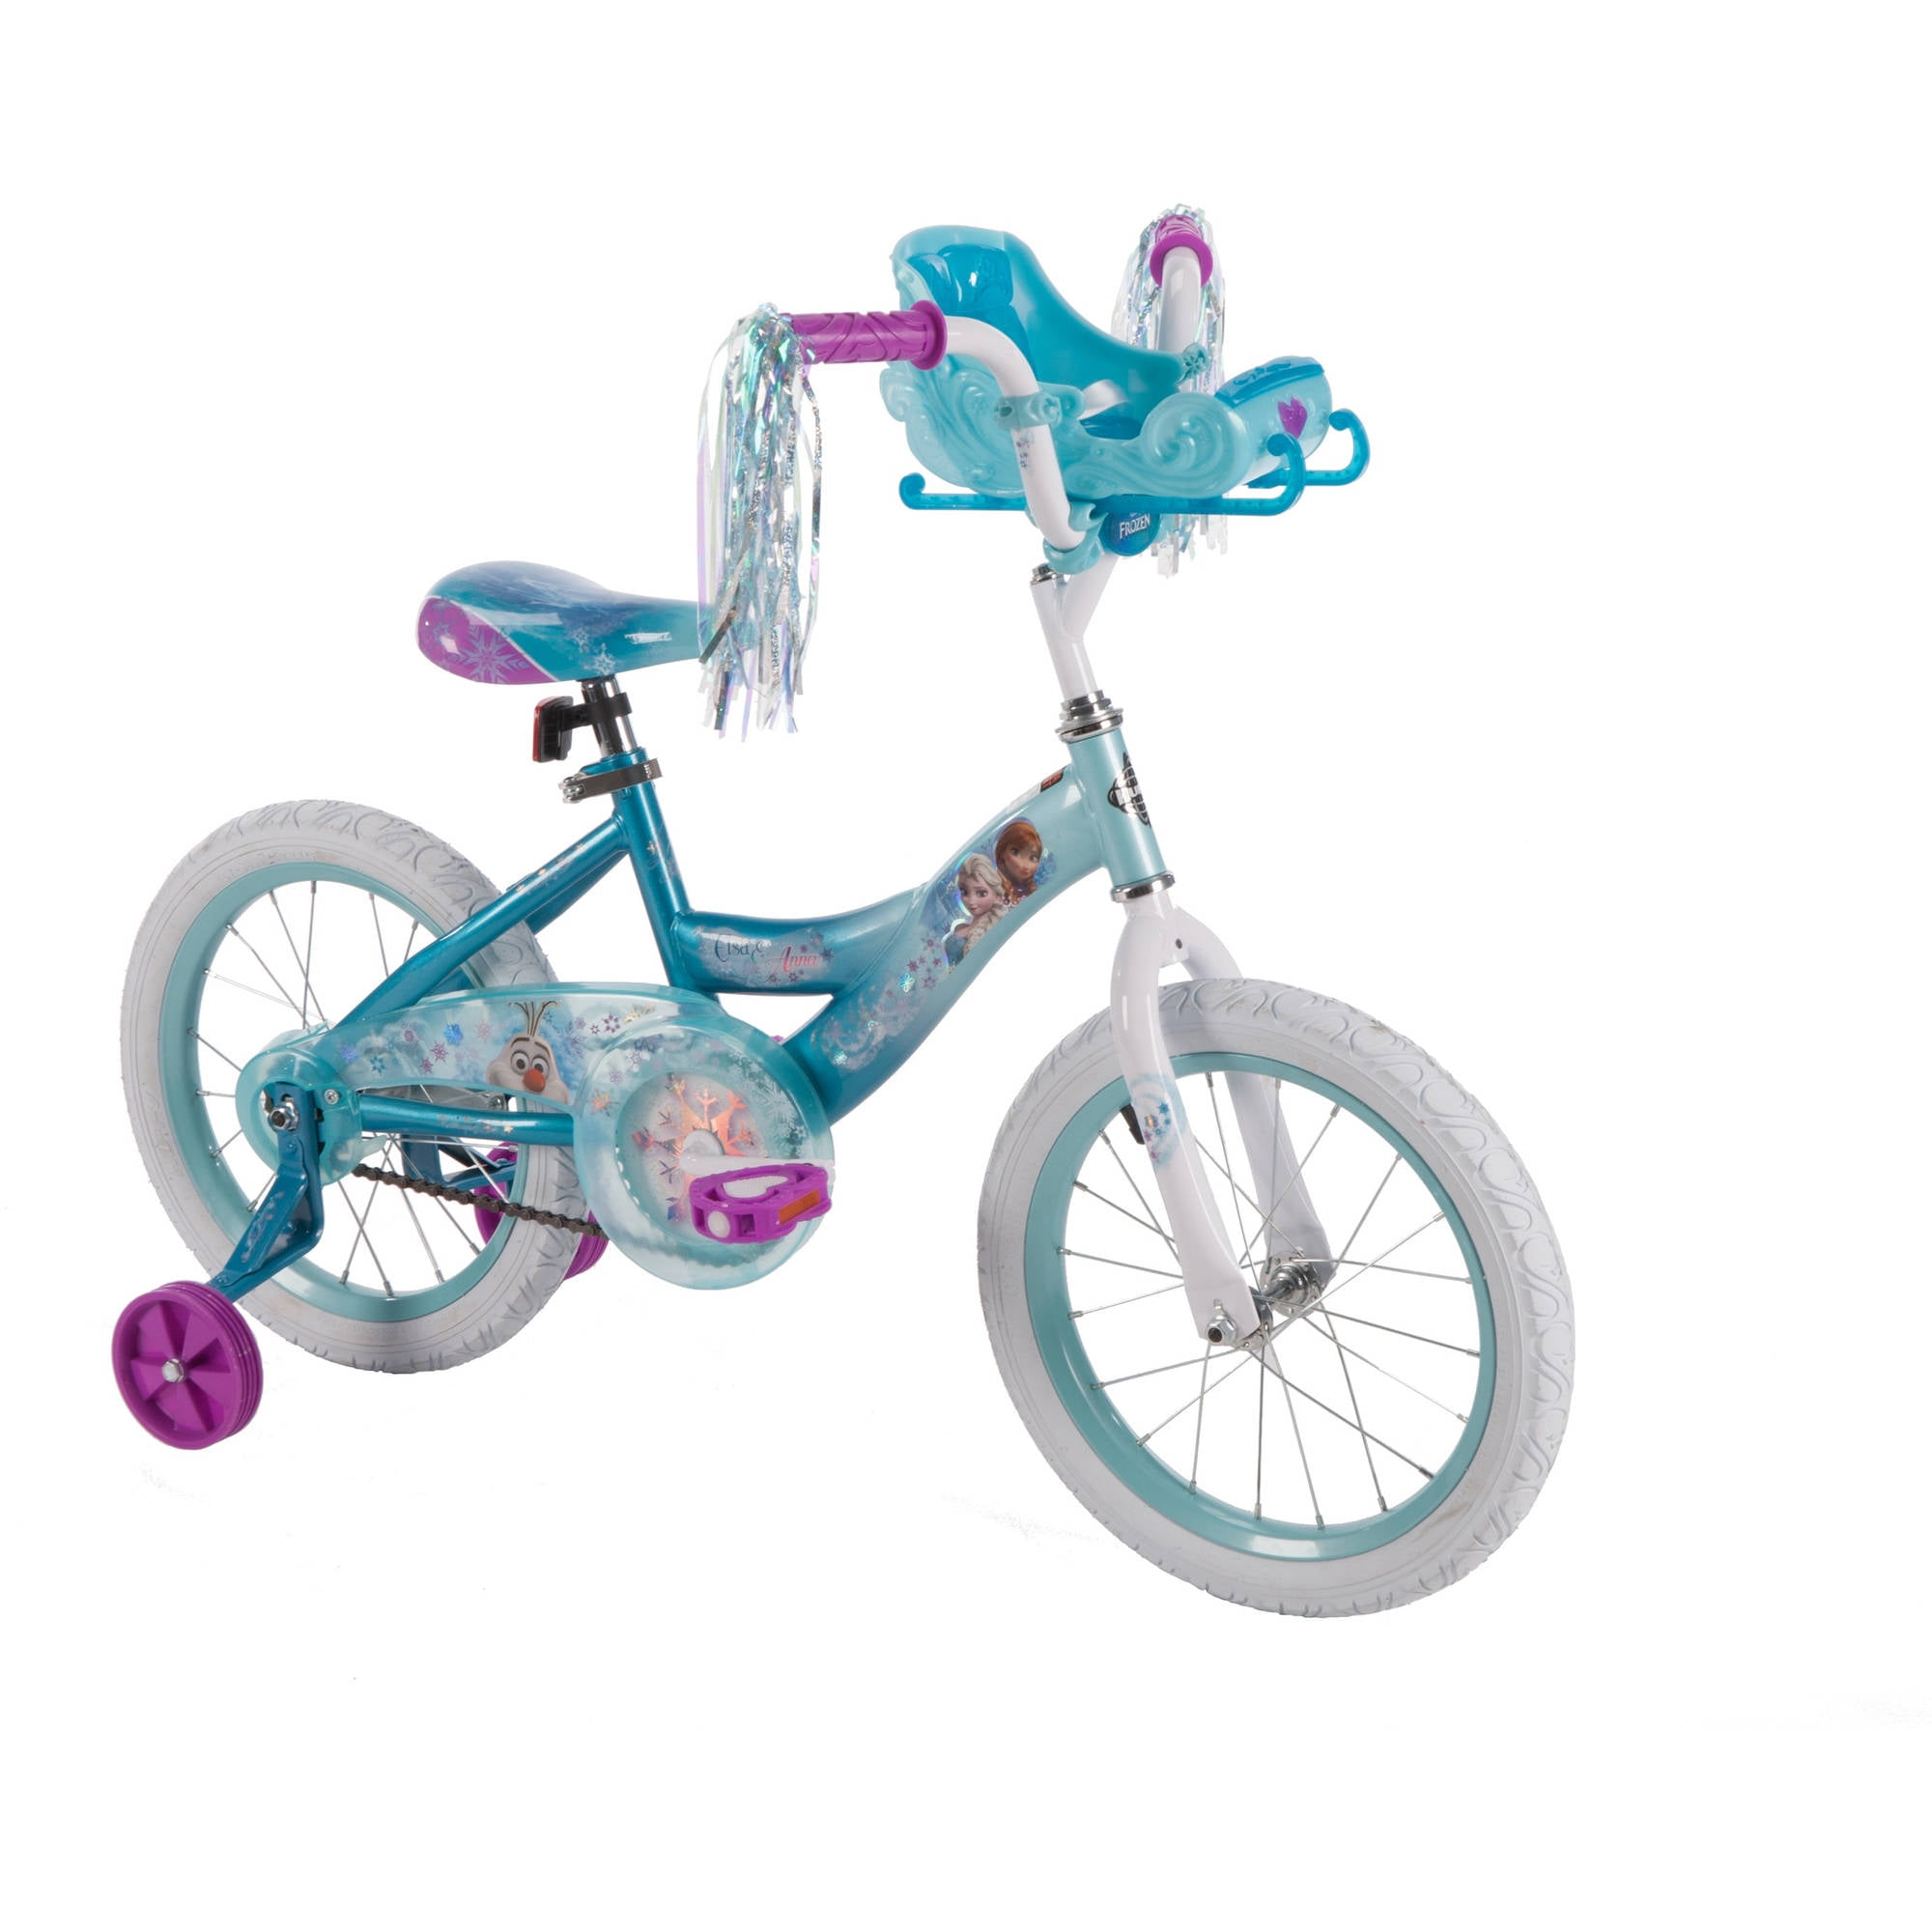 Disney Frozen 16" Girls' Blue Bike with Training Wheels by Huffy